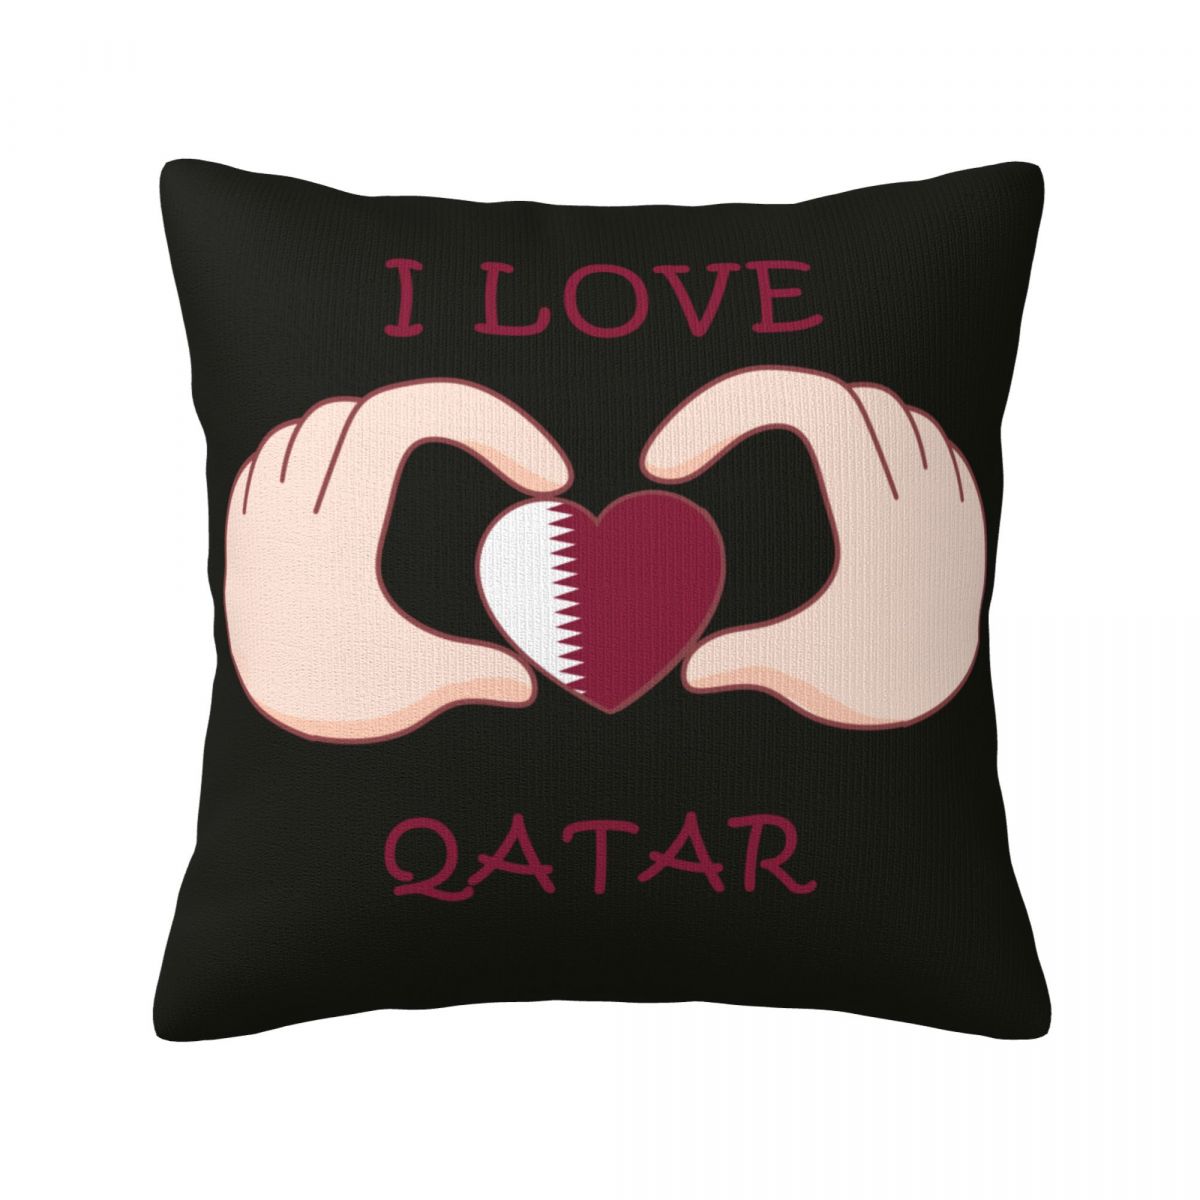 I Love Qatar Throw Pillow Covers 18x18